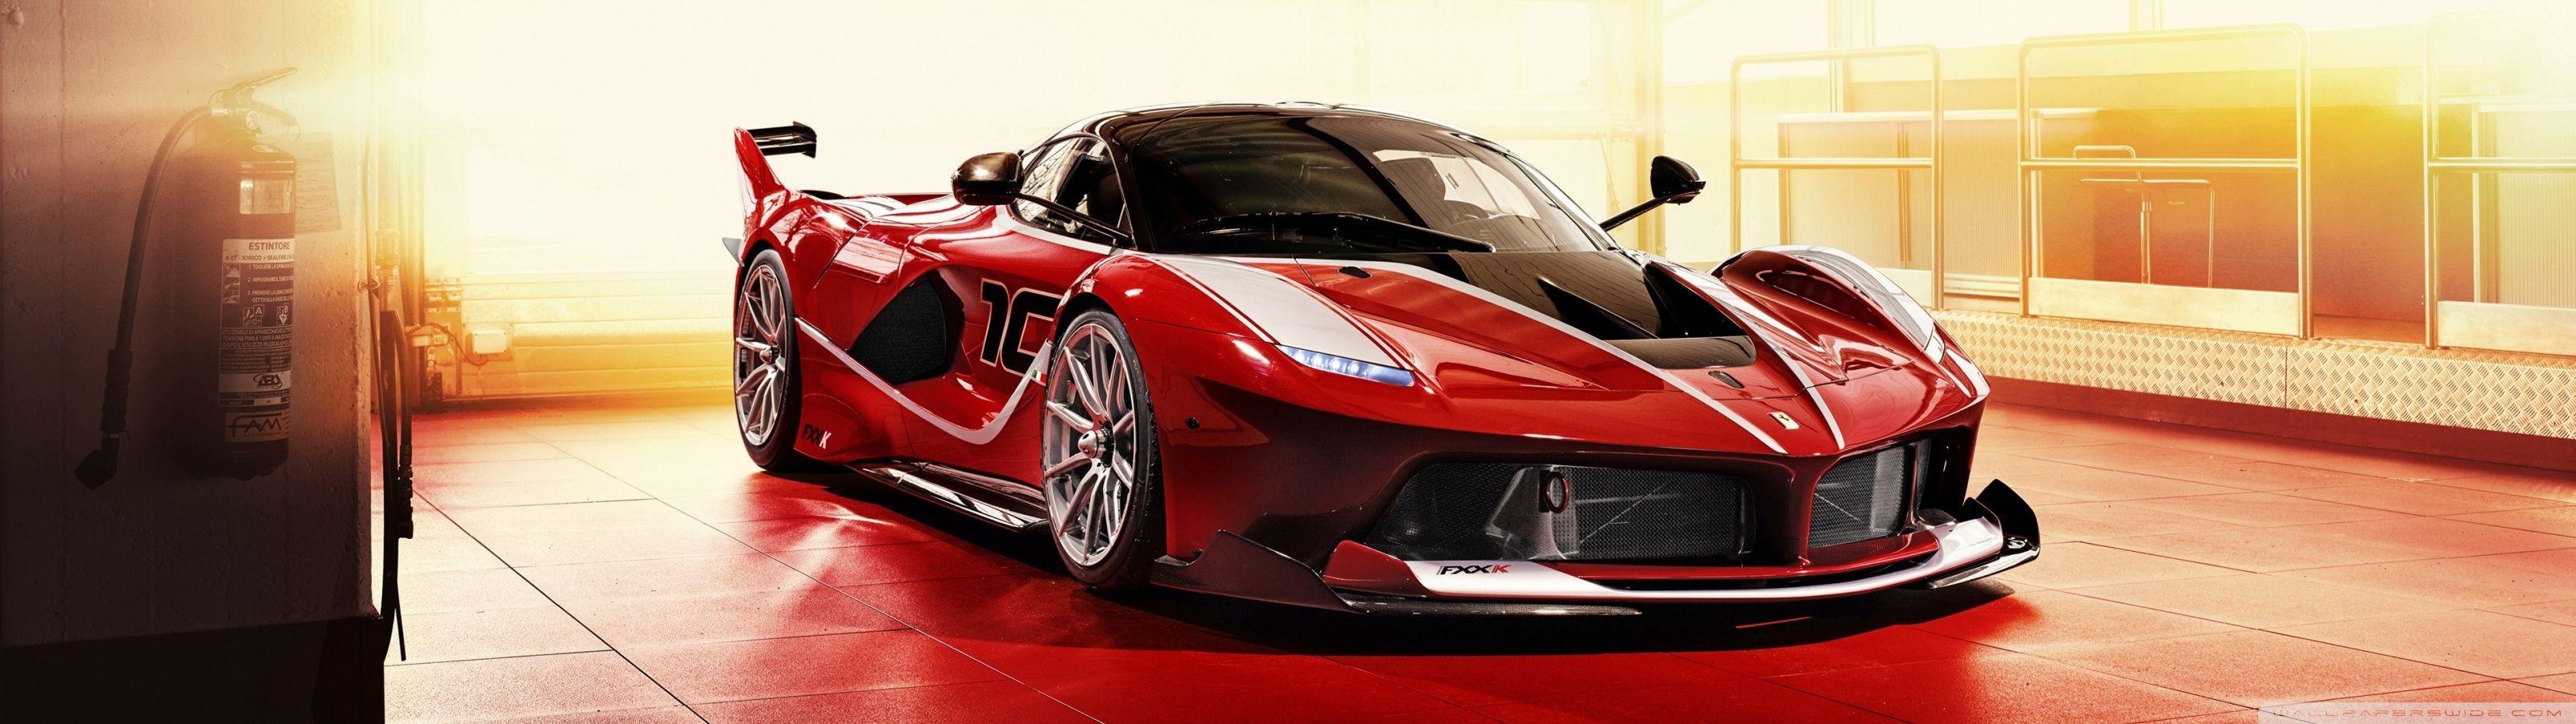 Red Ferrari FXX K Supercar ❤ 4K HD Desktop Wallpaper for • Wide